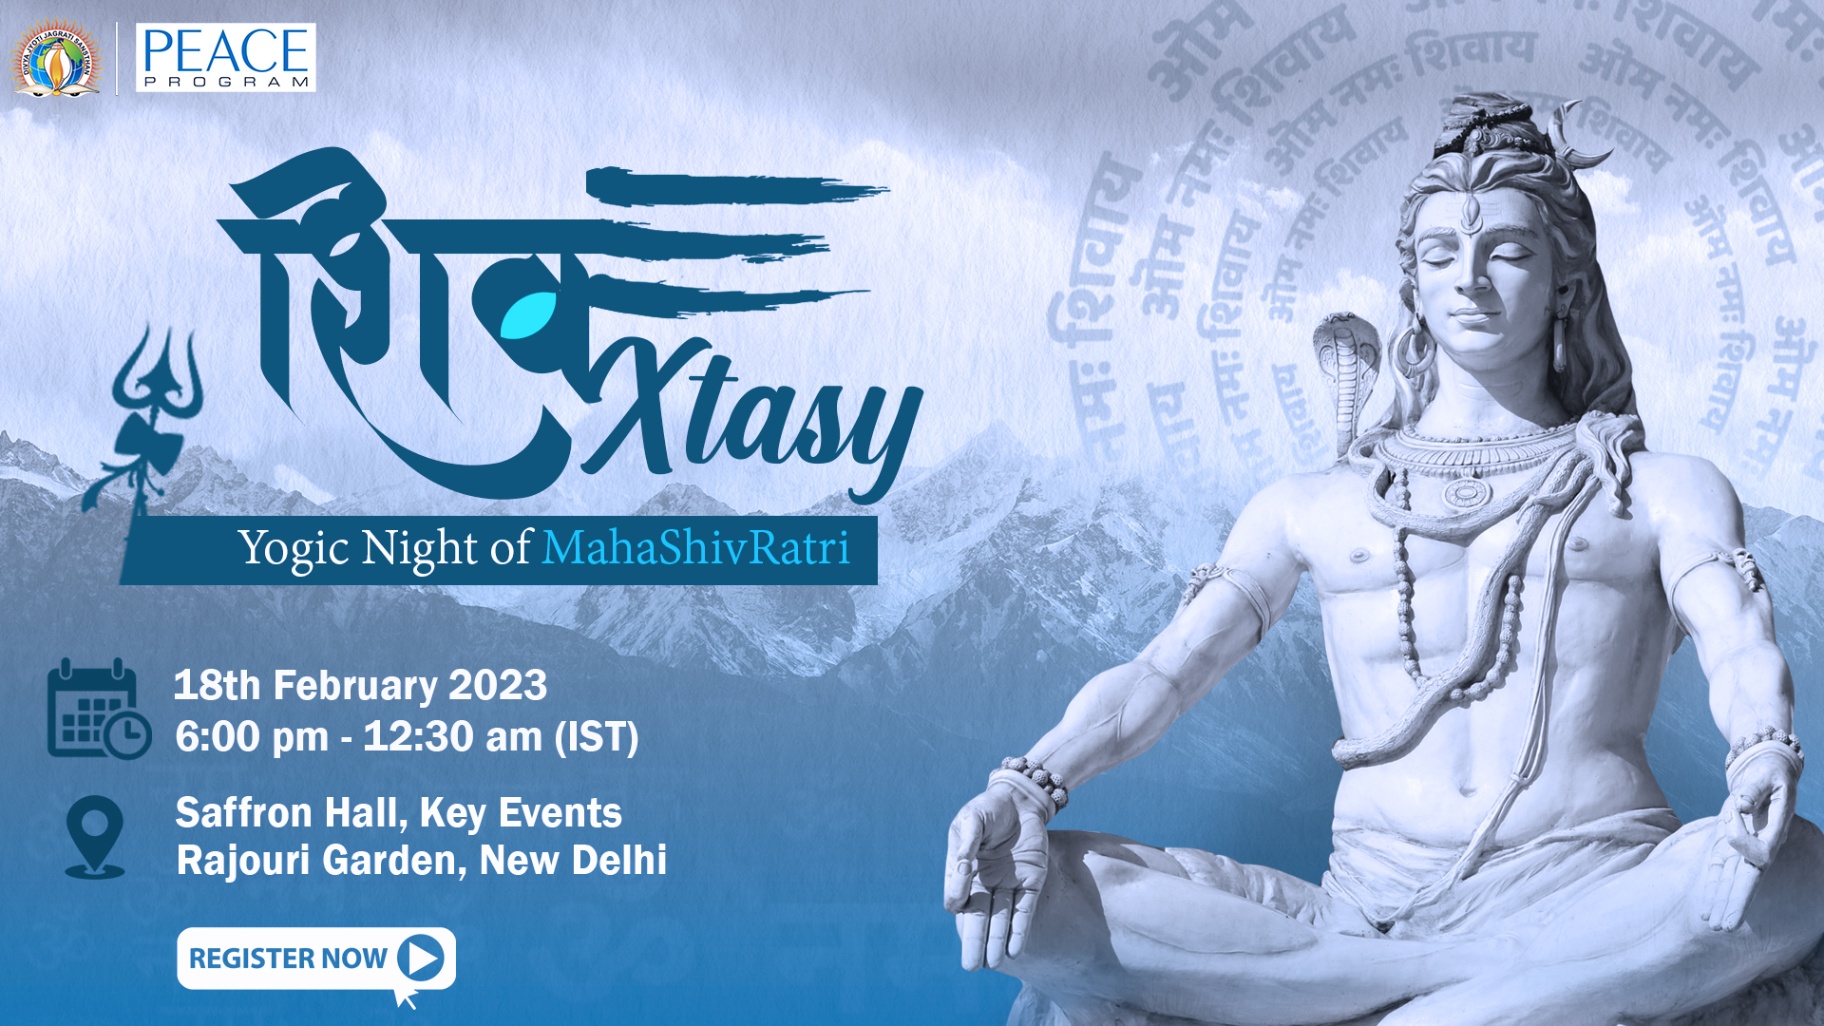 Shiv Xtasy Corporate Event on MahaShivRatri